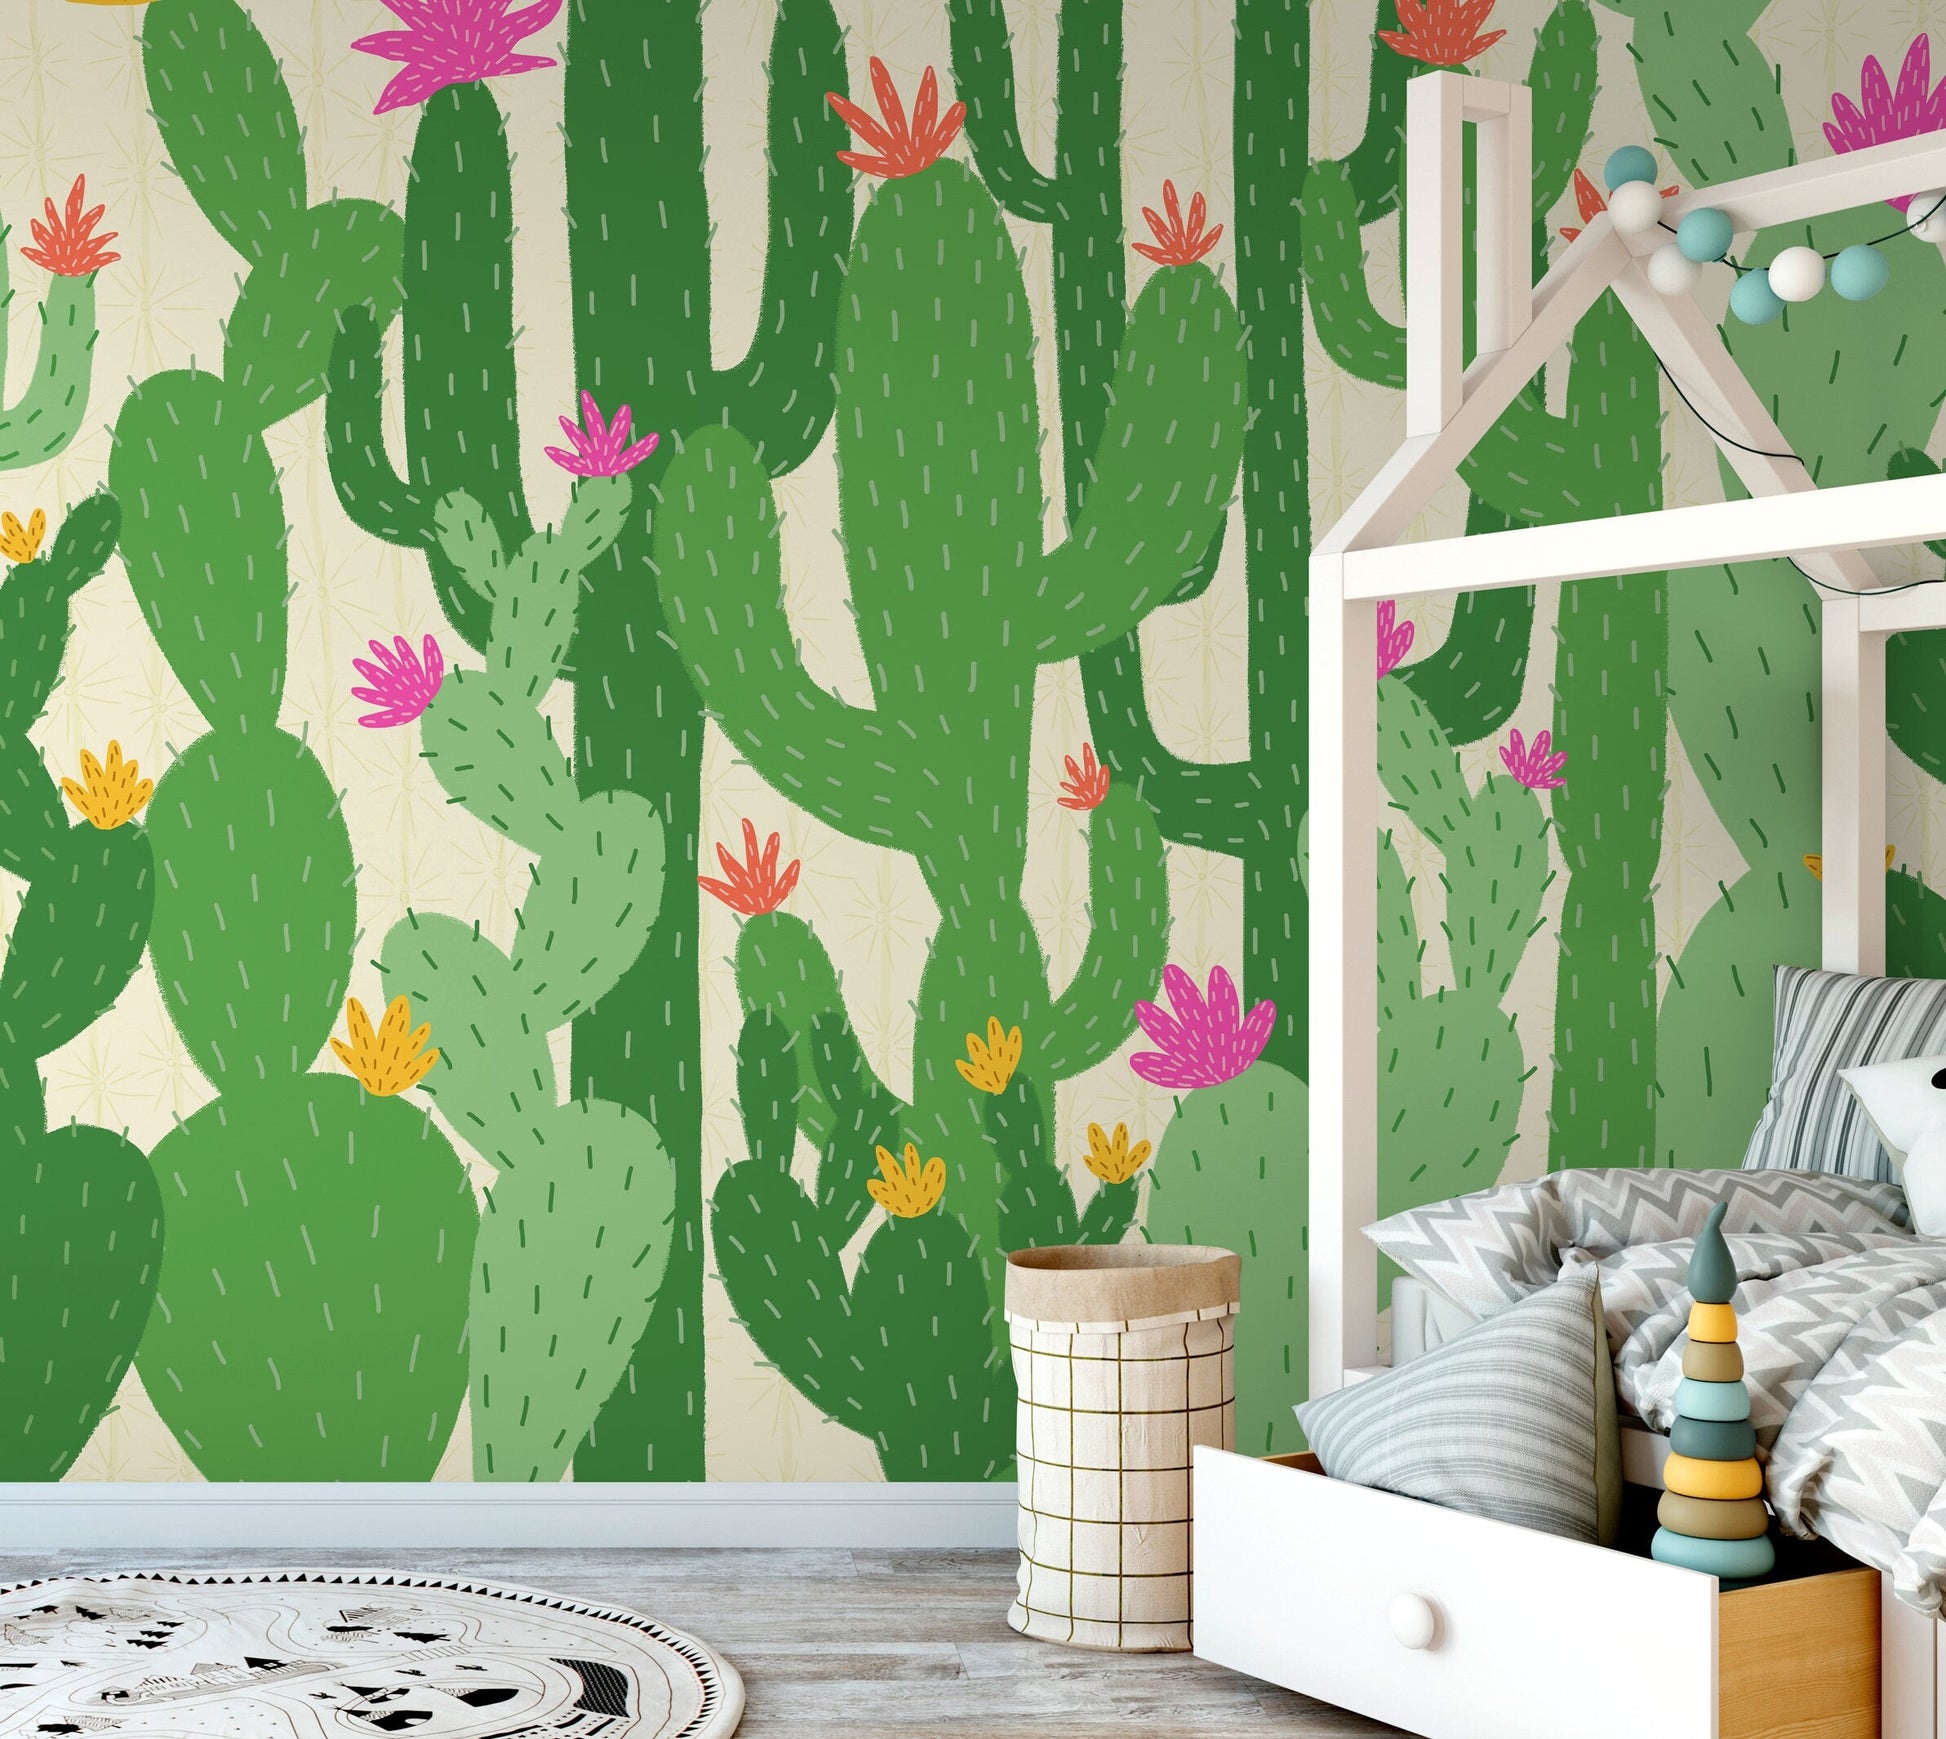 Wallpaper Peel and Stick Wallpaper Removable Wallpaper Home Decor Wall Art Wall Decor Room Decor / Kids Floral Cactus Wallpaper - C477